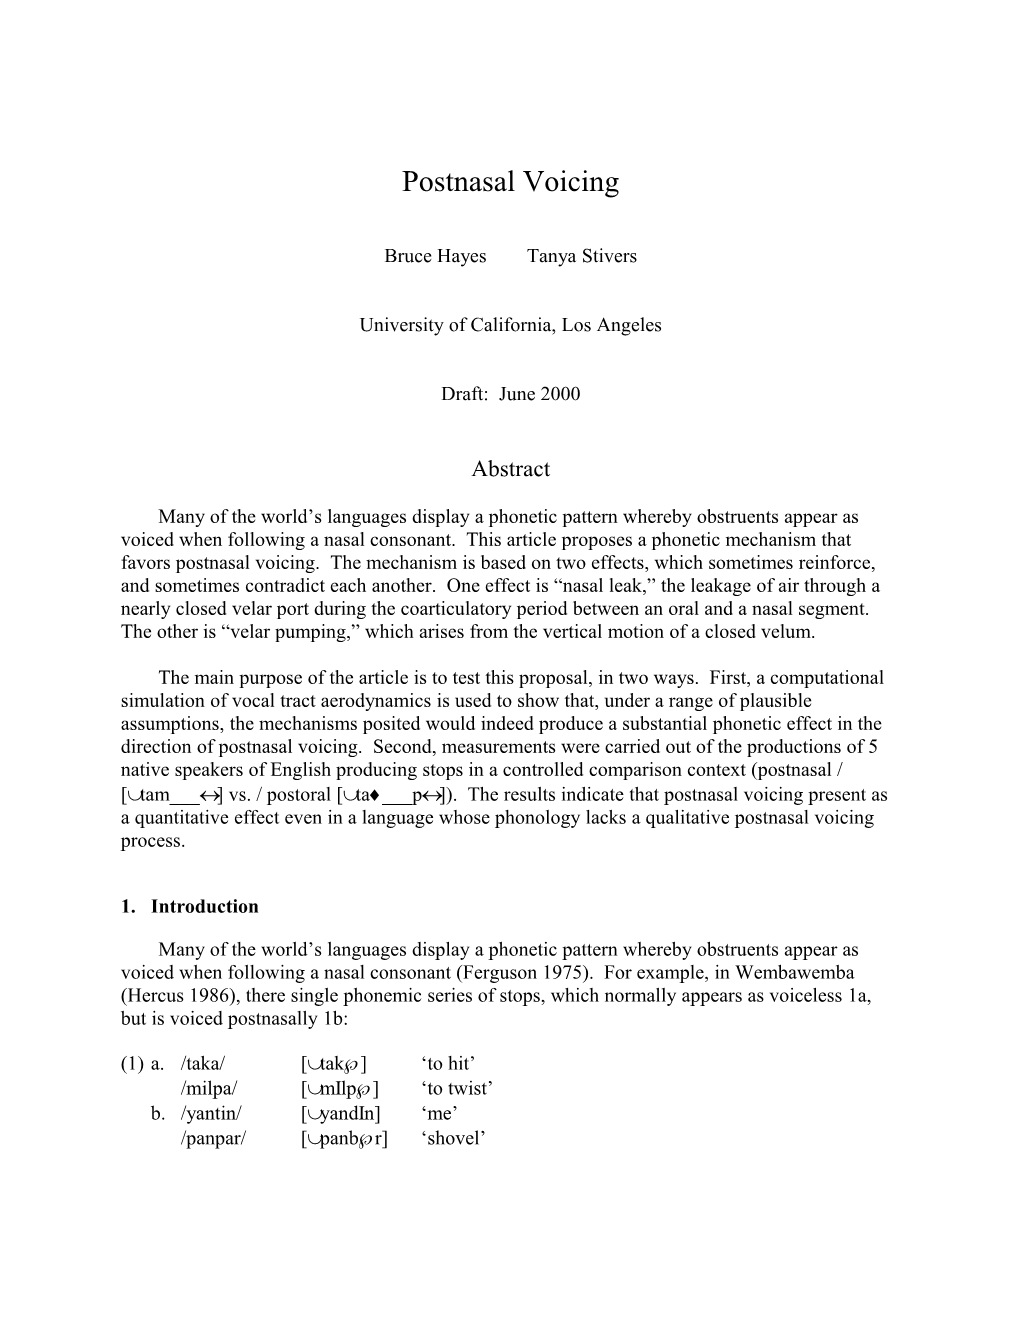 Hayes and Stiversa Phonetic Account of Postnasal Voicingp. 1